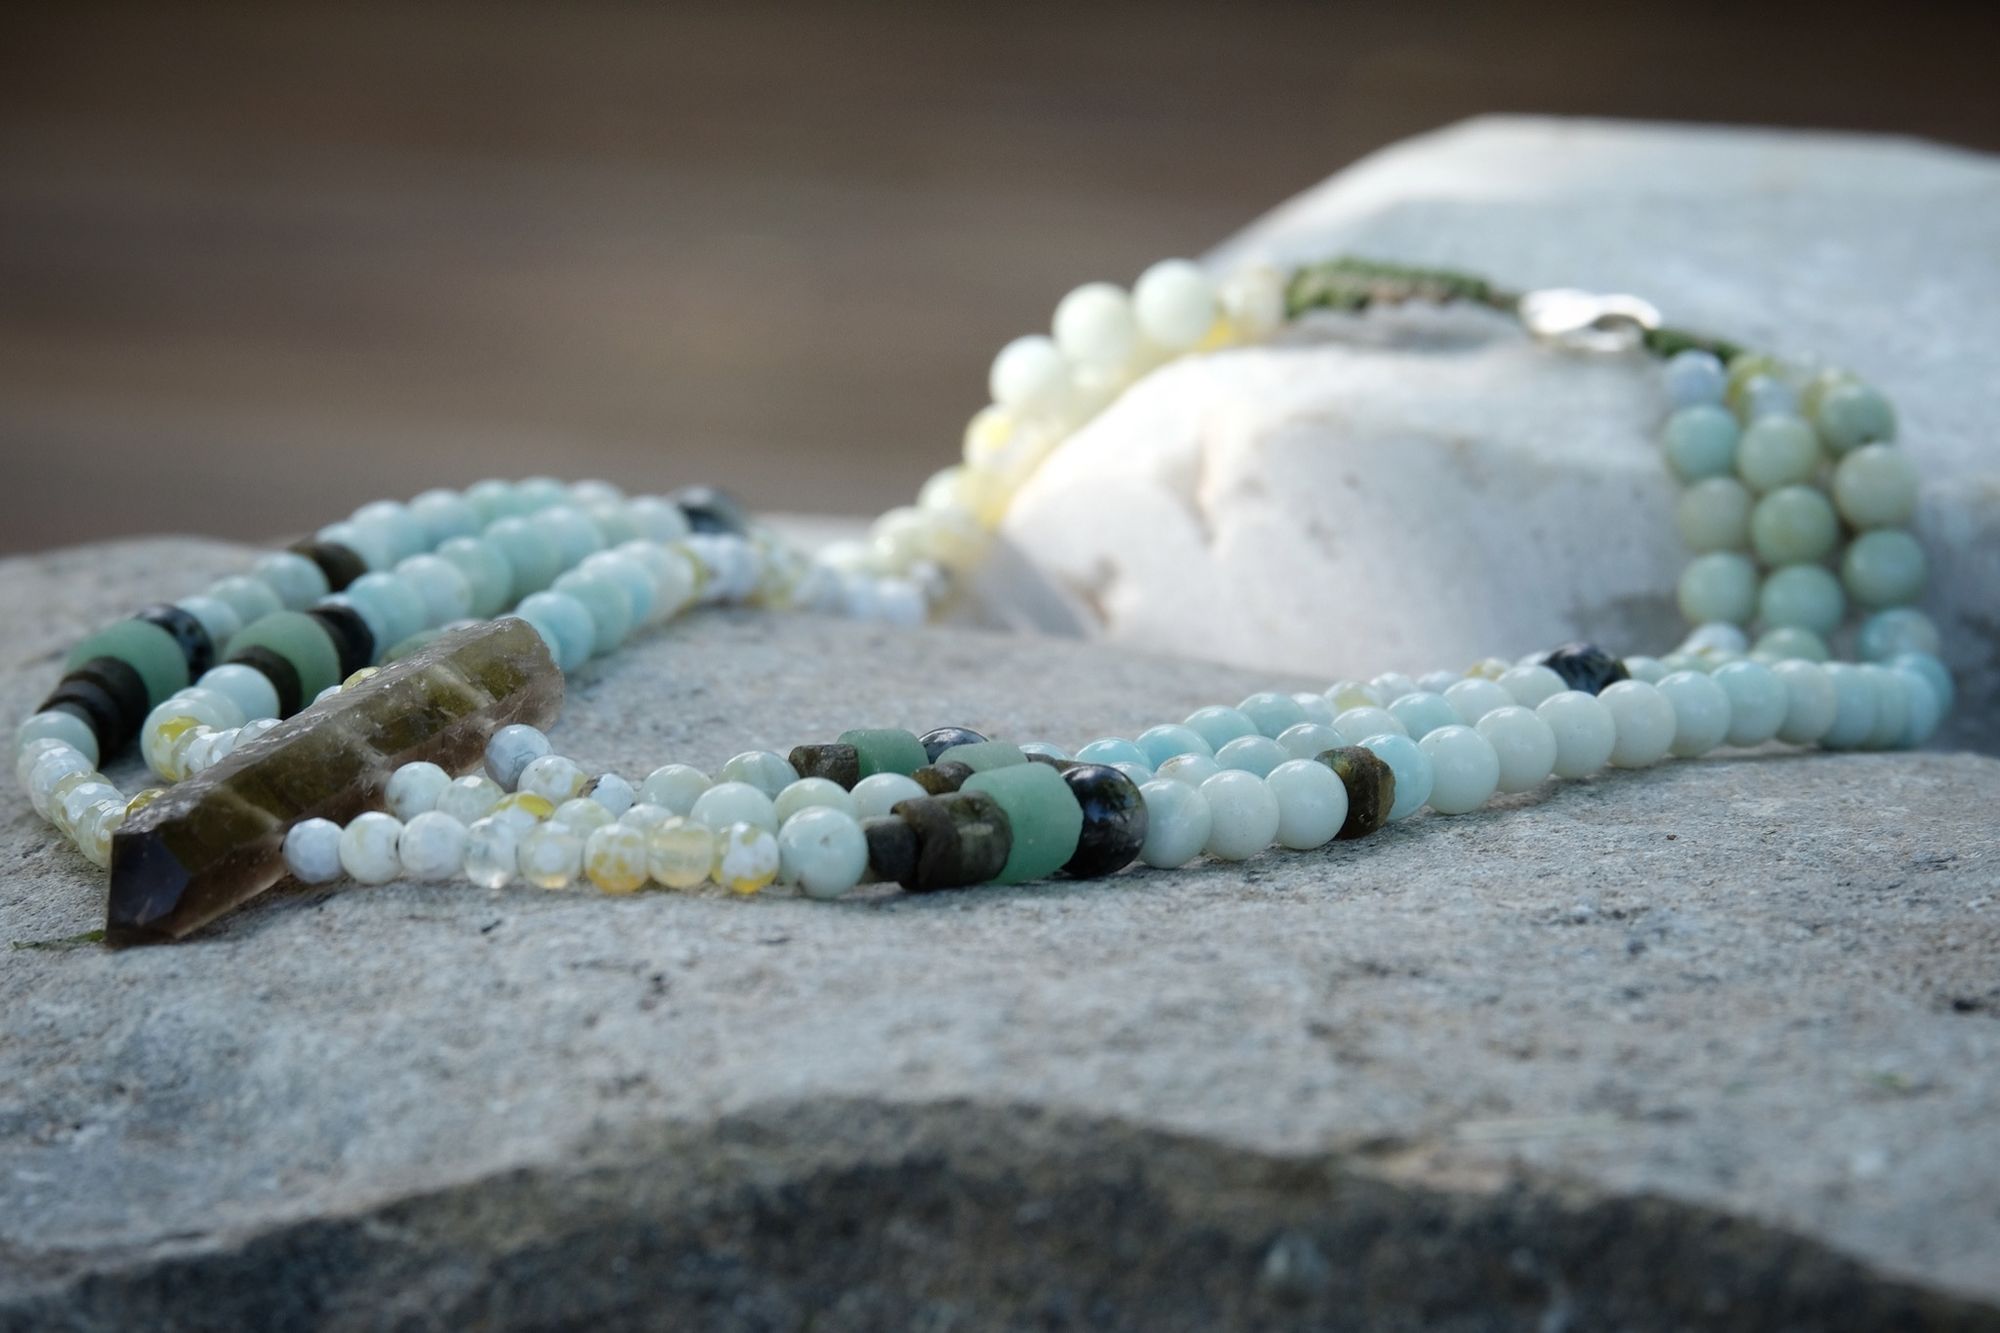 Smoky quartz, fire agate, Amazonite, labradorite, aventurine and rutilated quartz necklace laying on a stone